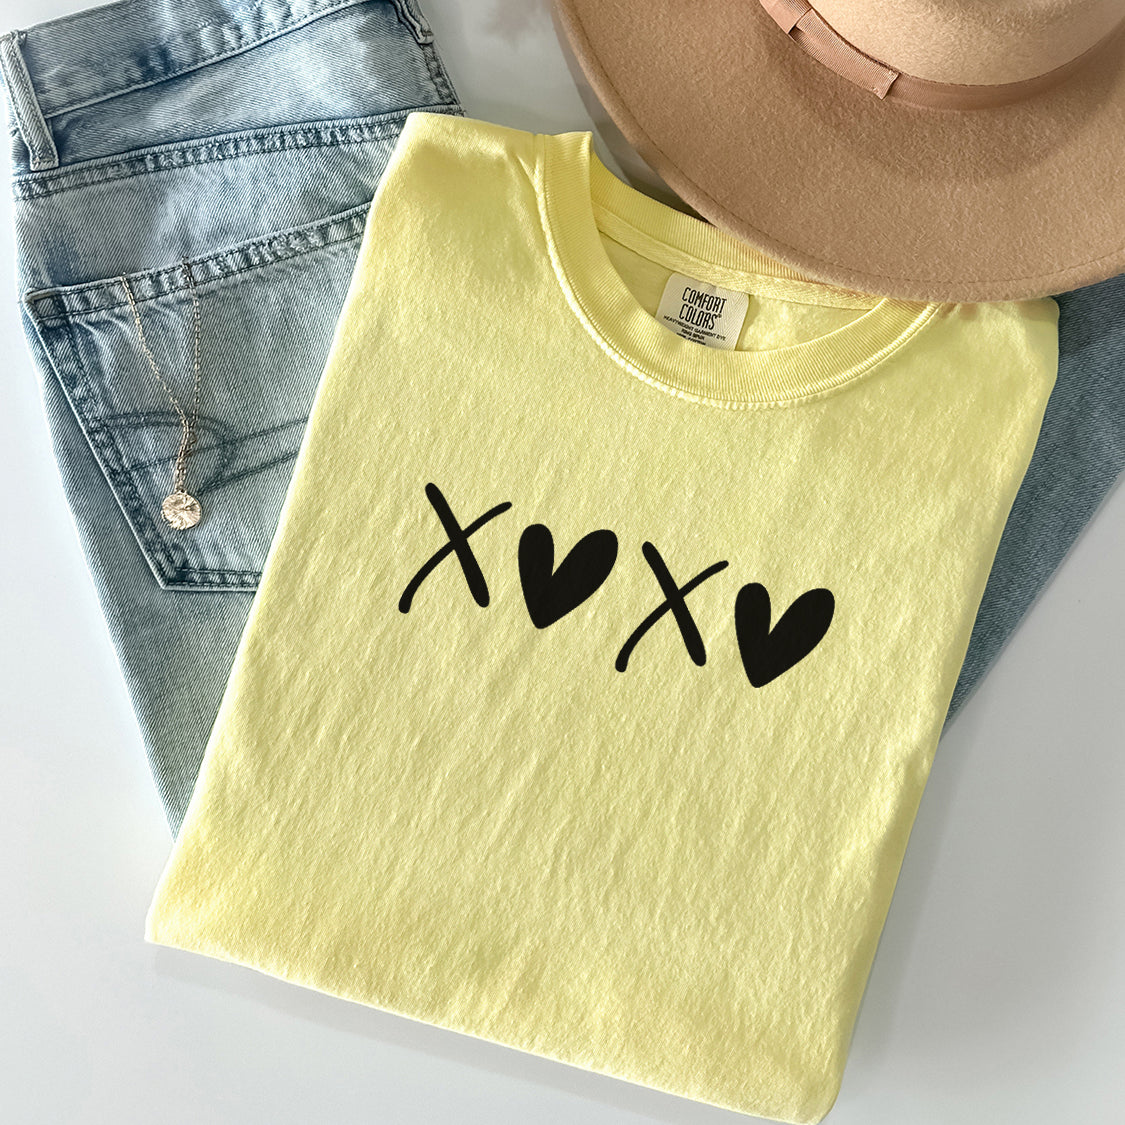 XOXO T-shirt - Love  Minimal Design Printed T-Shirt